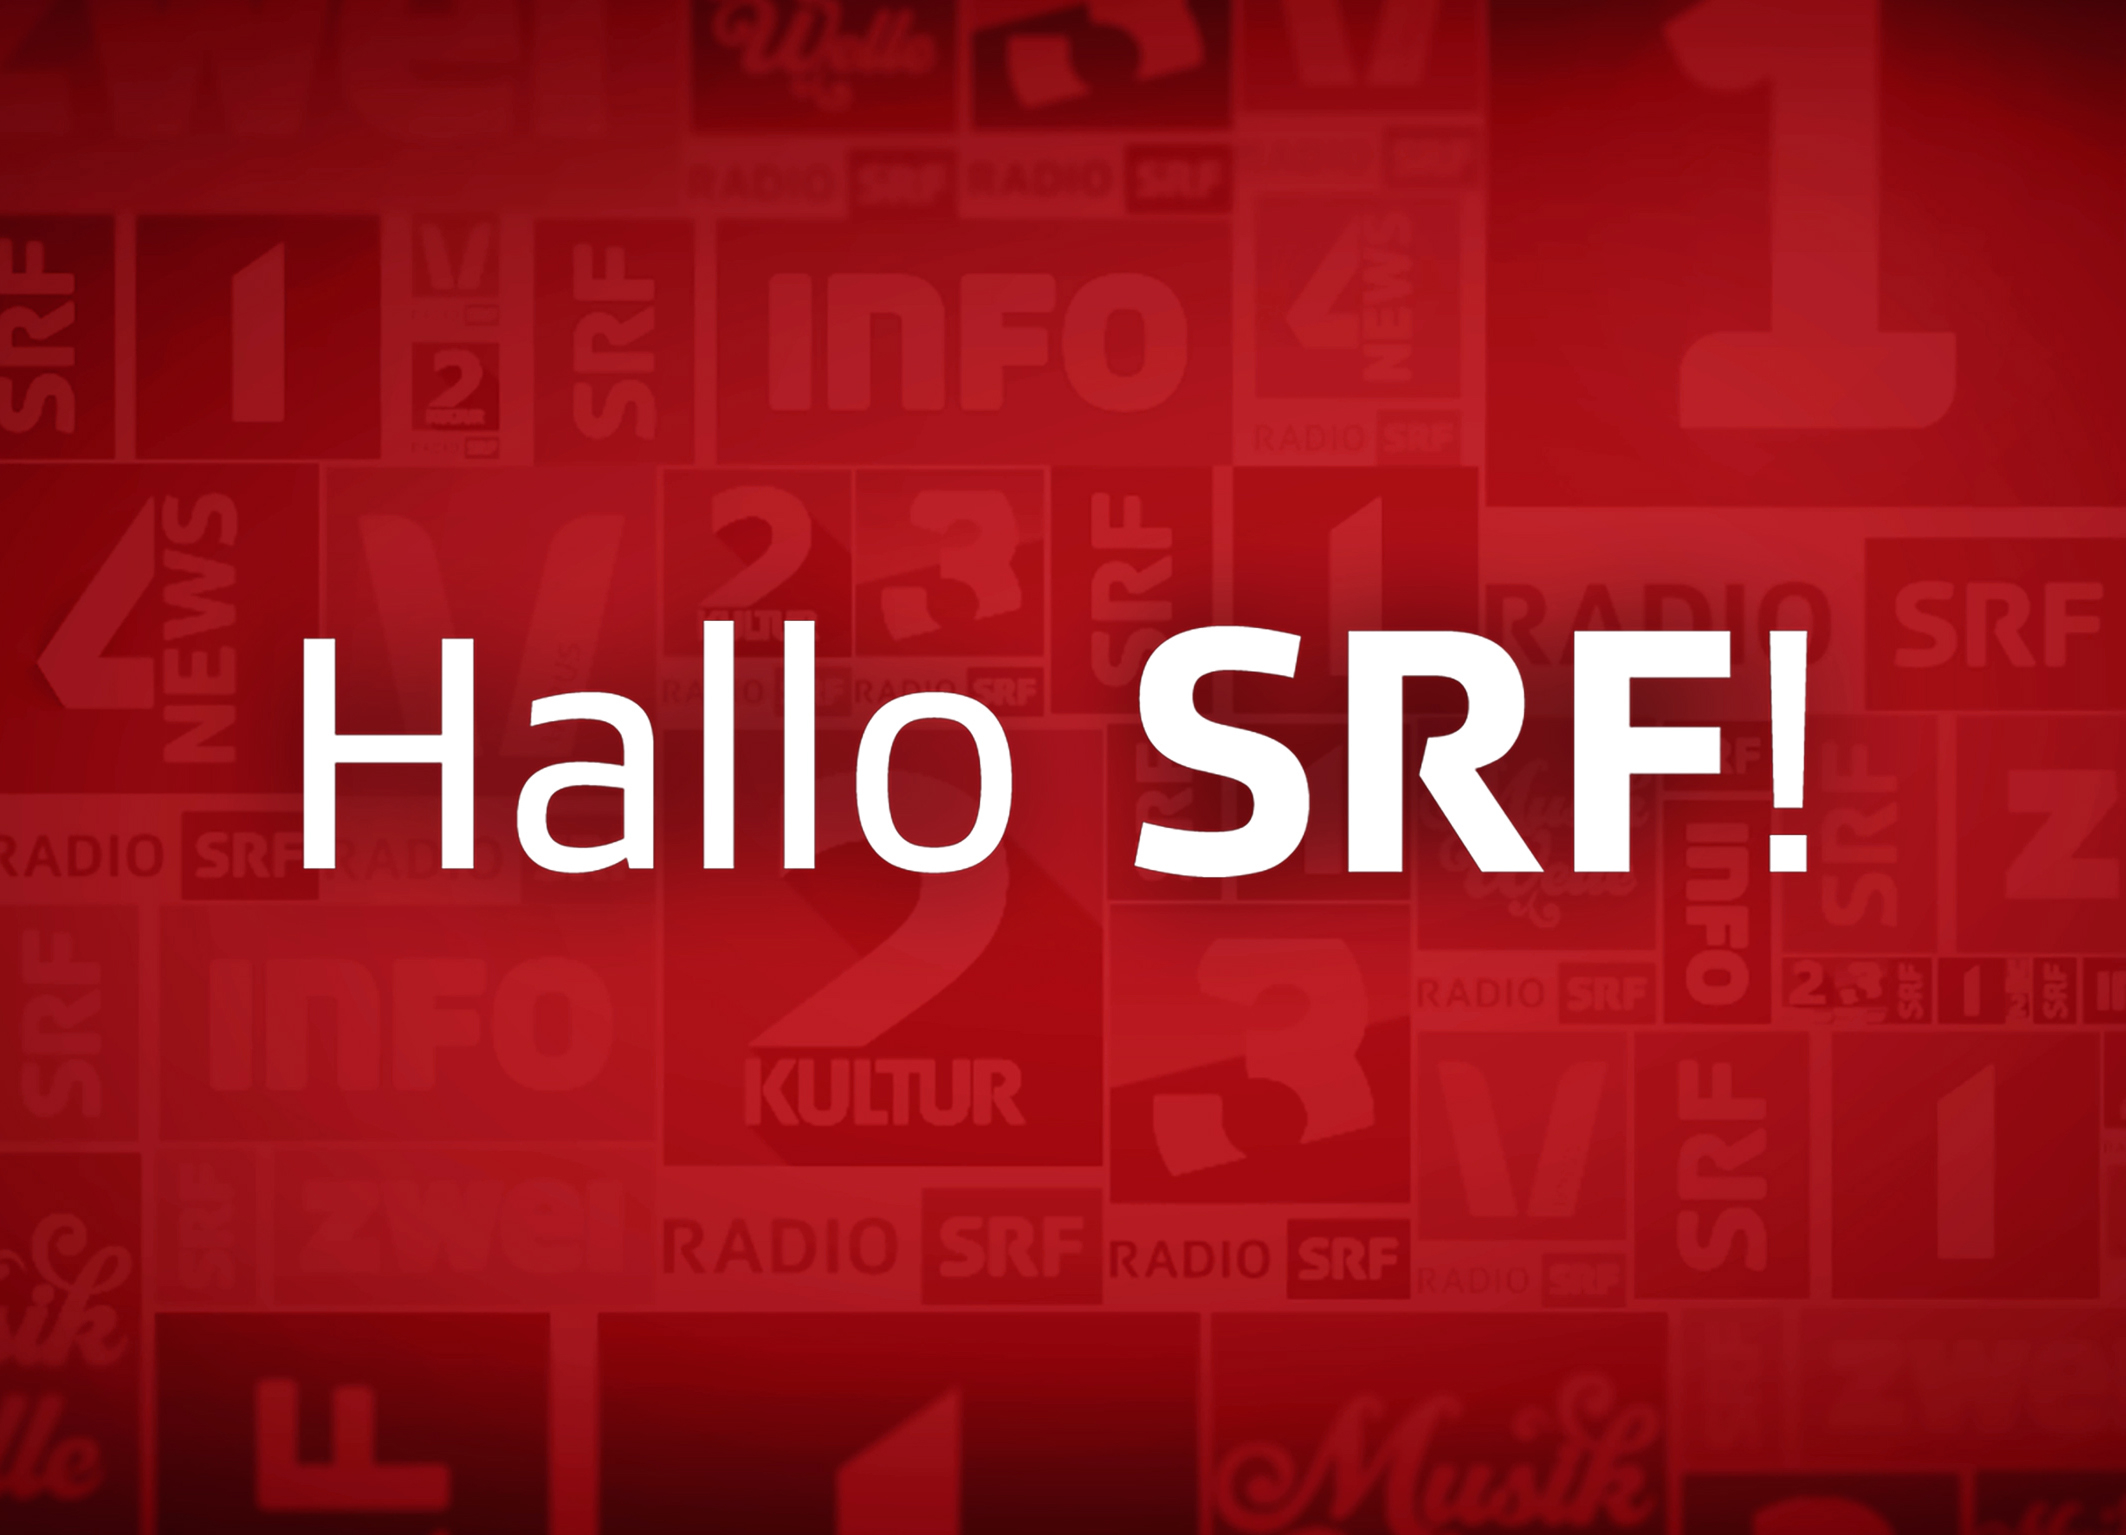 Hallo SRF! Keyvisual 2015 